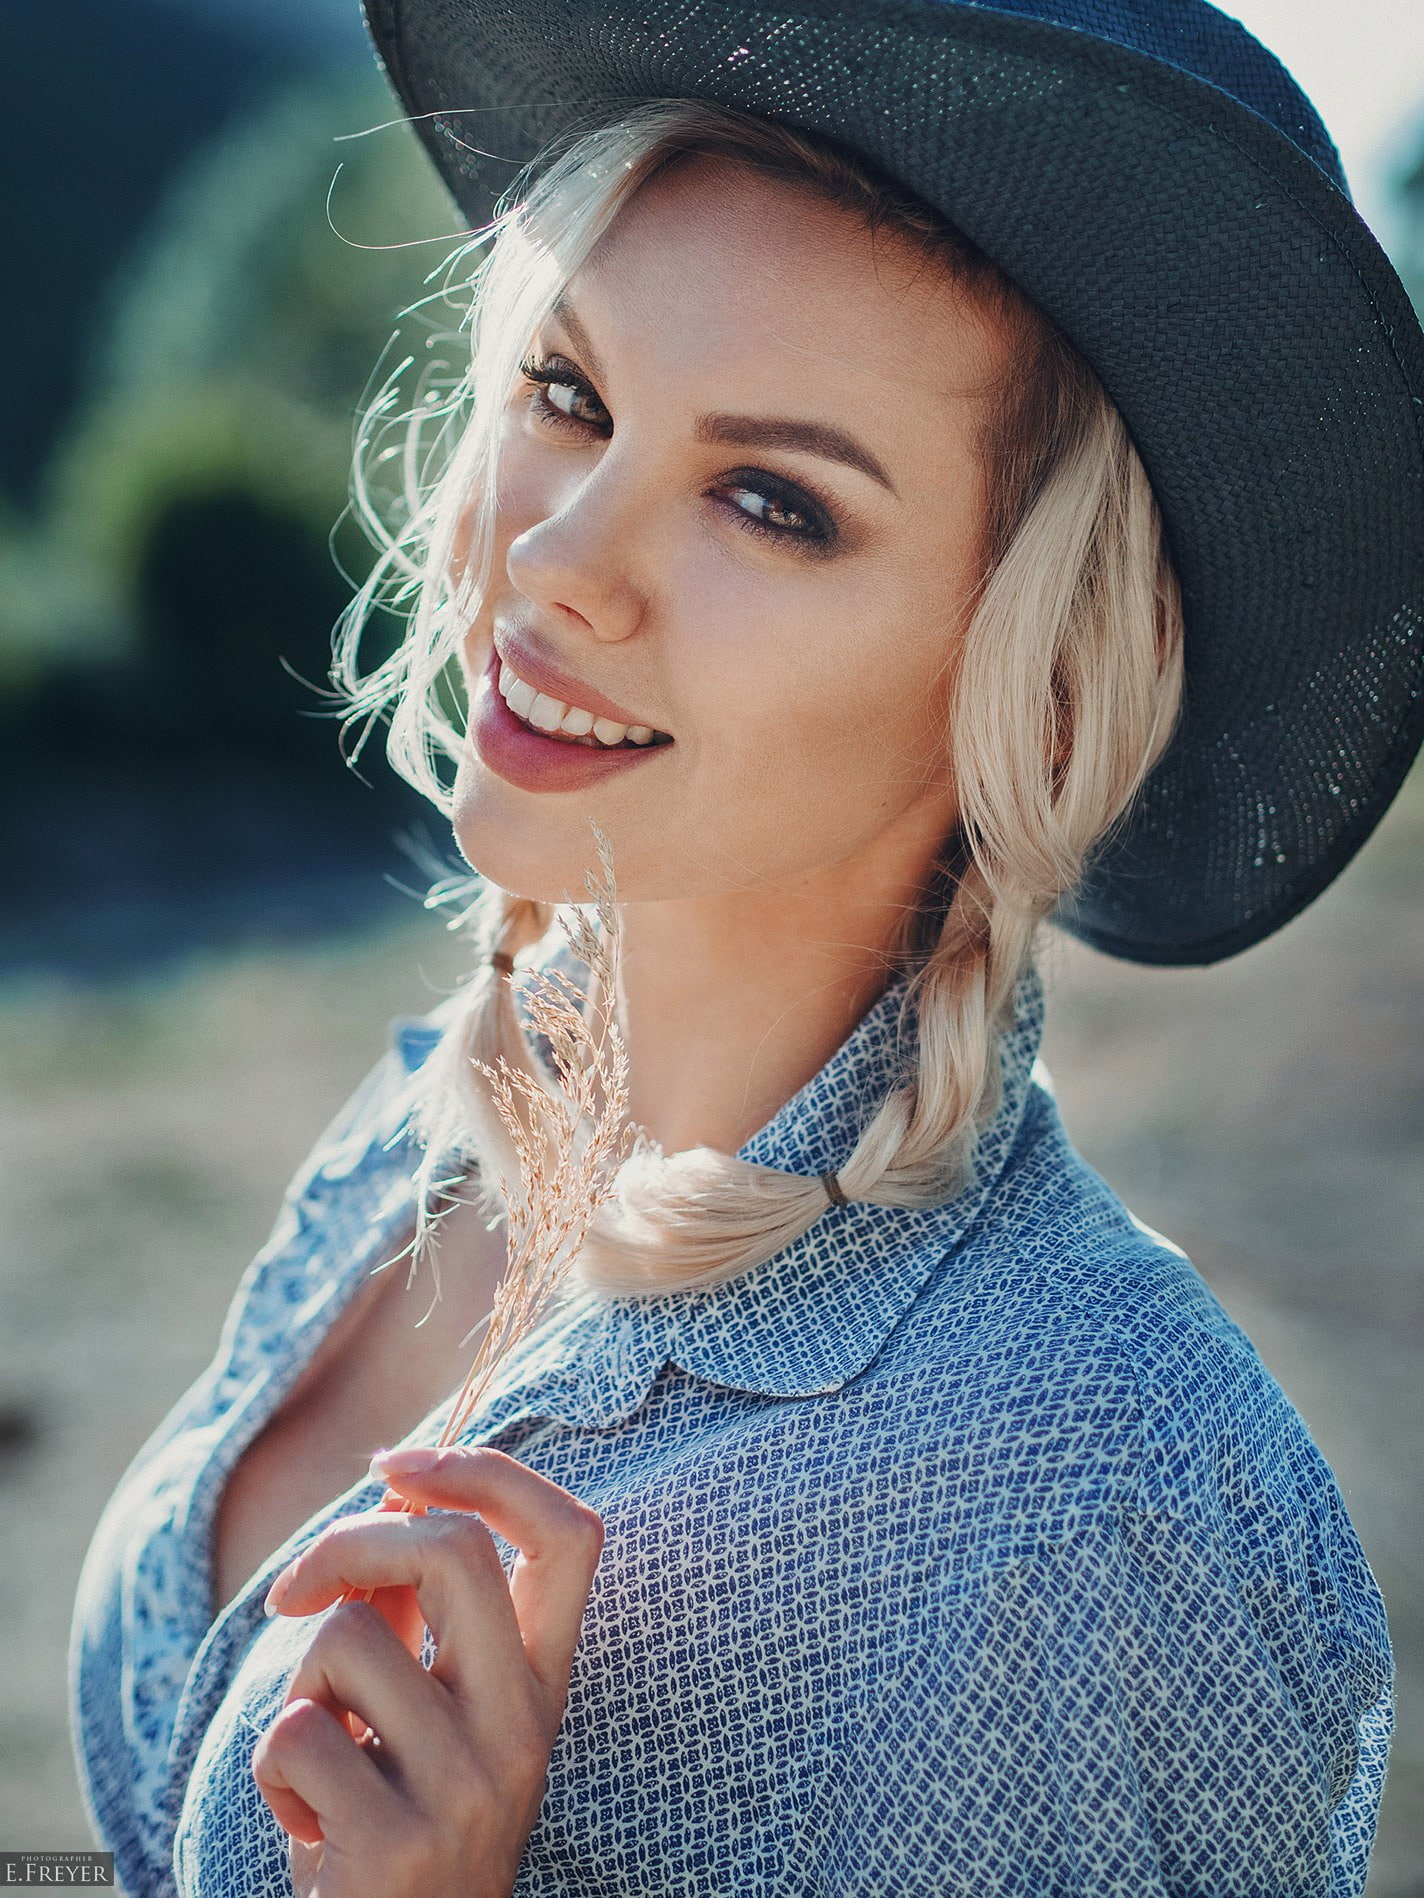 Free Download Hd Wallpaper Evgeny Freyer Blonde Portrait Smiling Women Model Hat